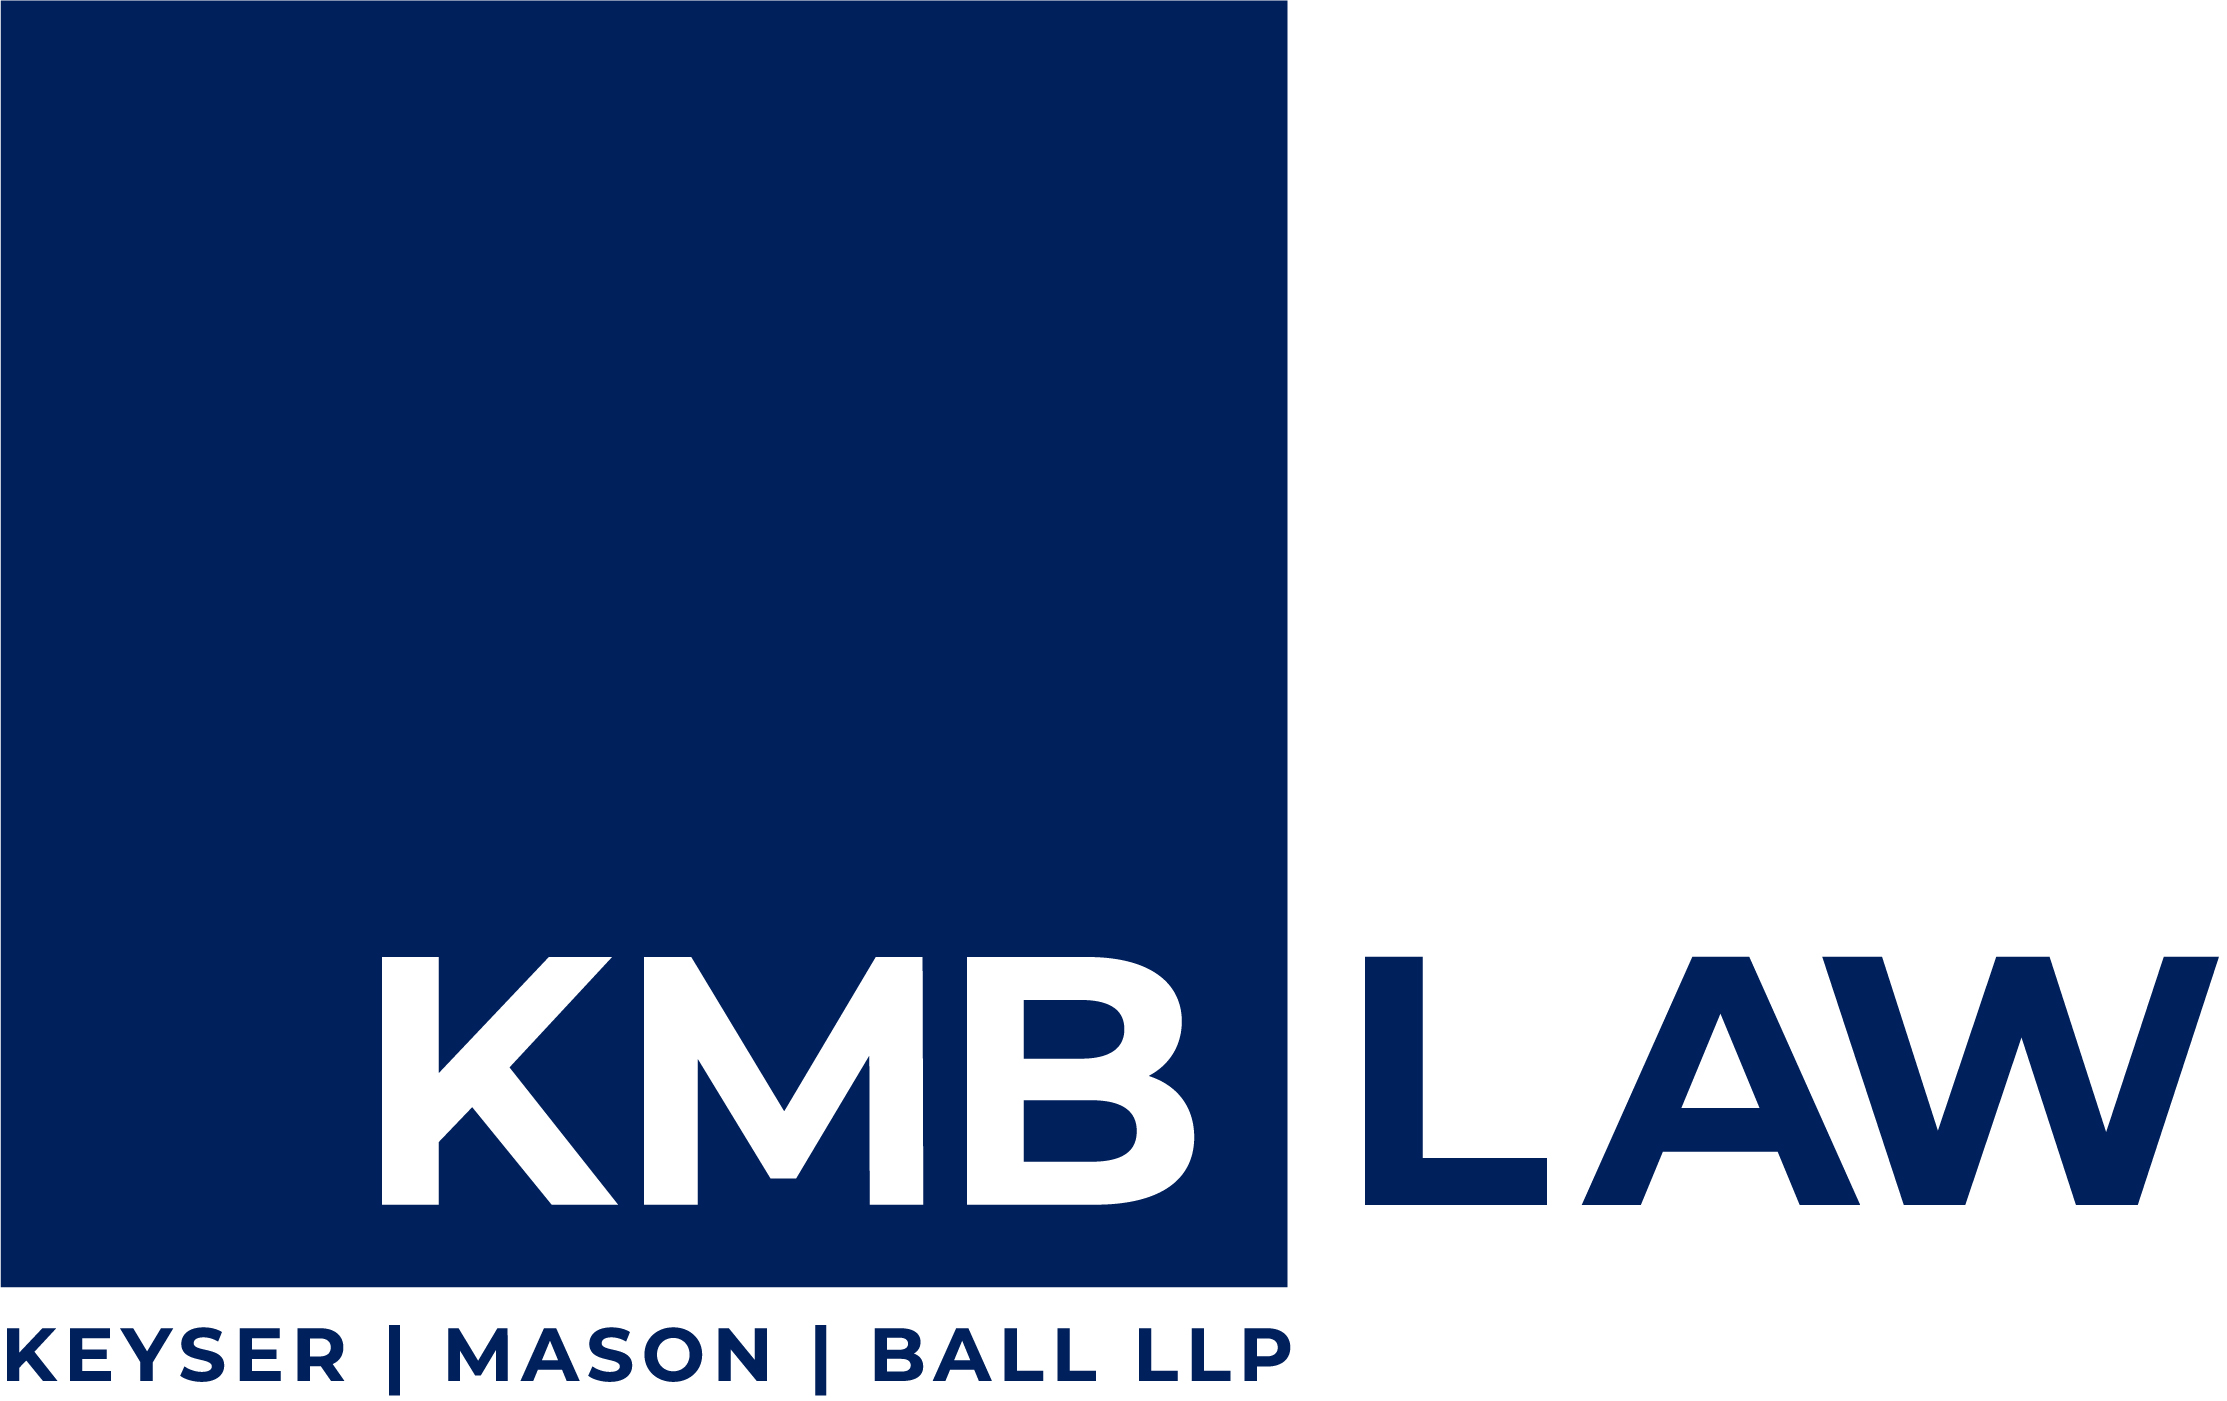 Keyser Mason Ball, LLP